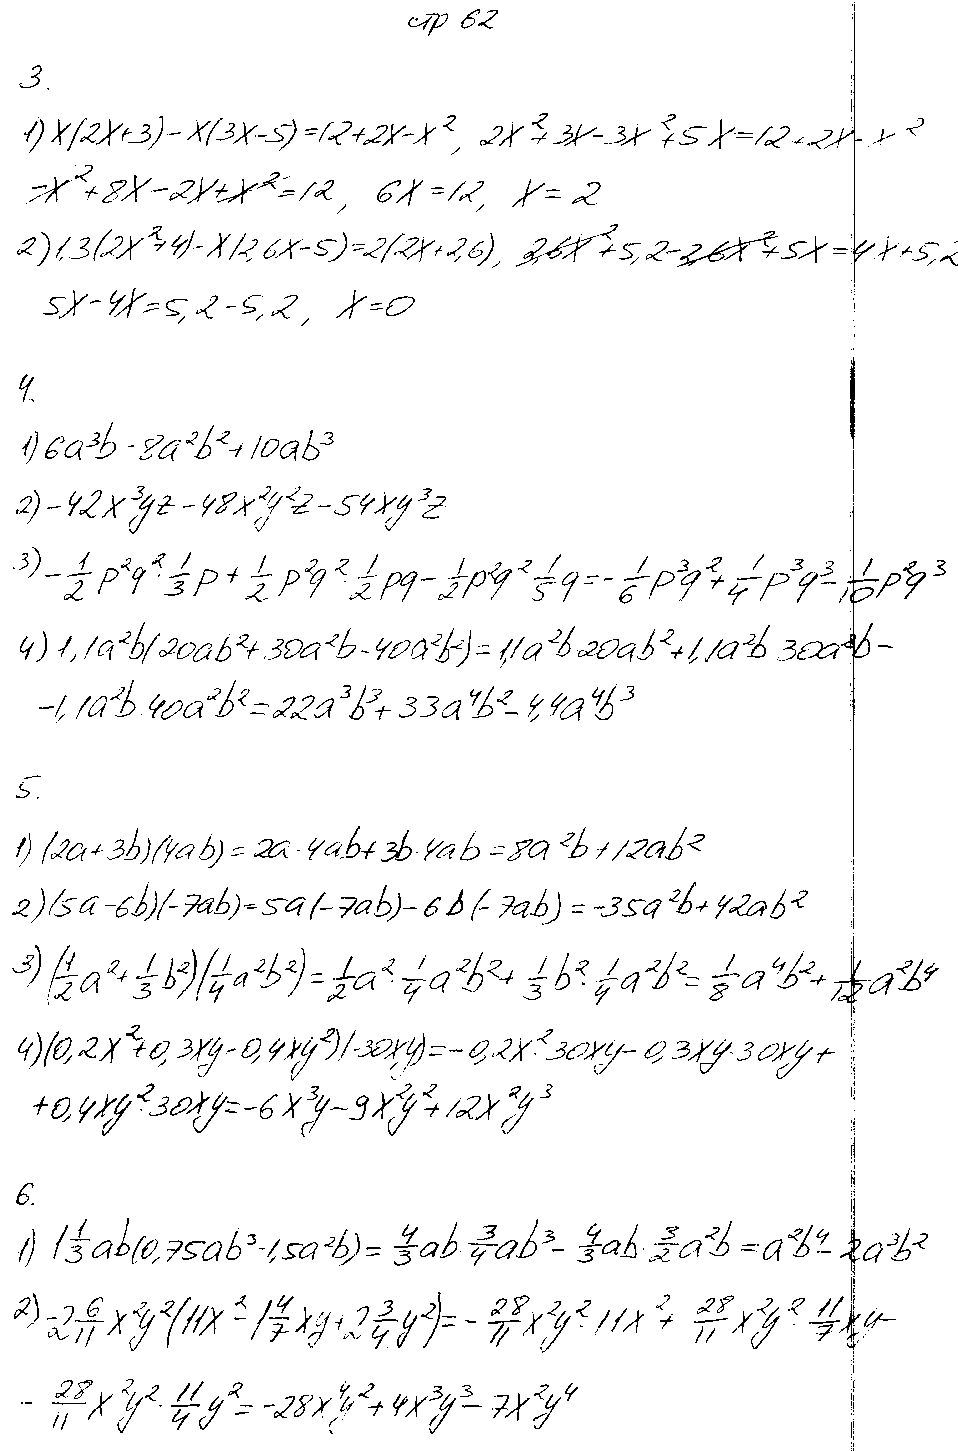 ГДЗ Алгебра 7 класс - стр. 62